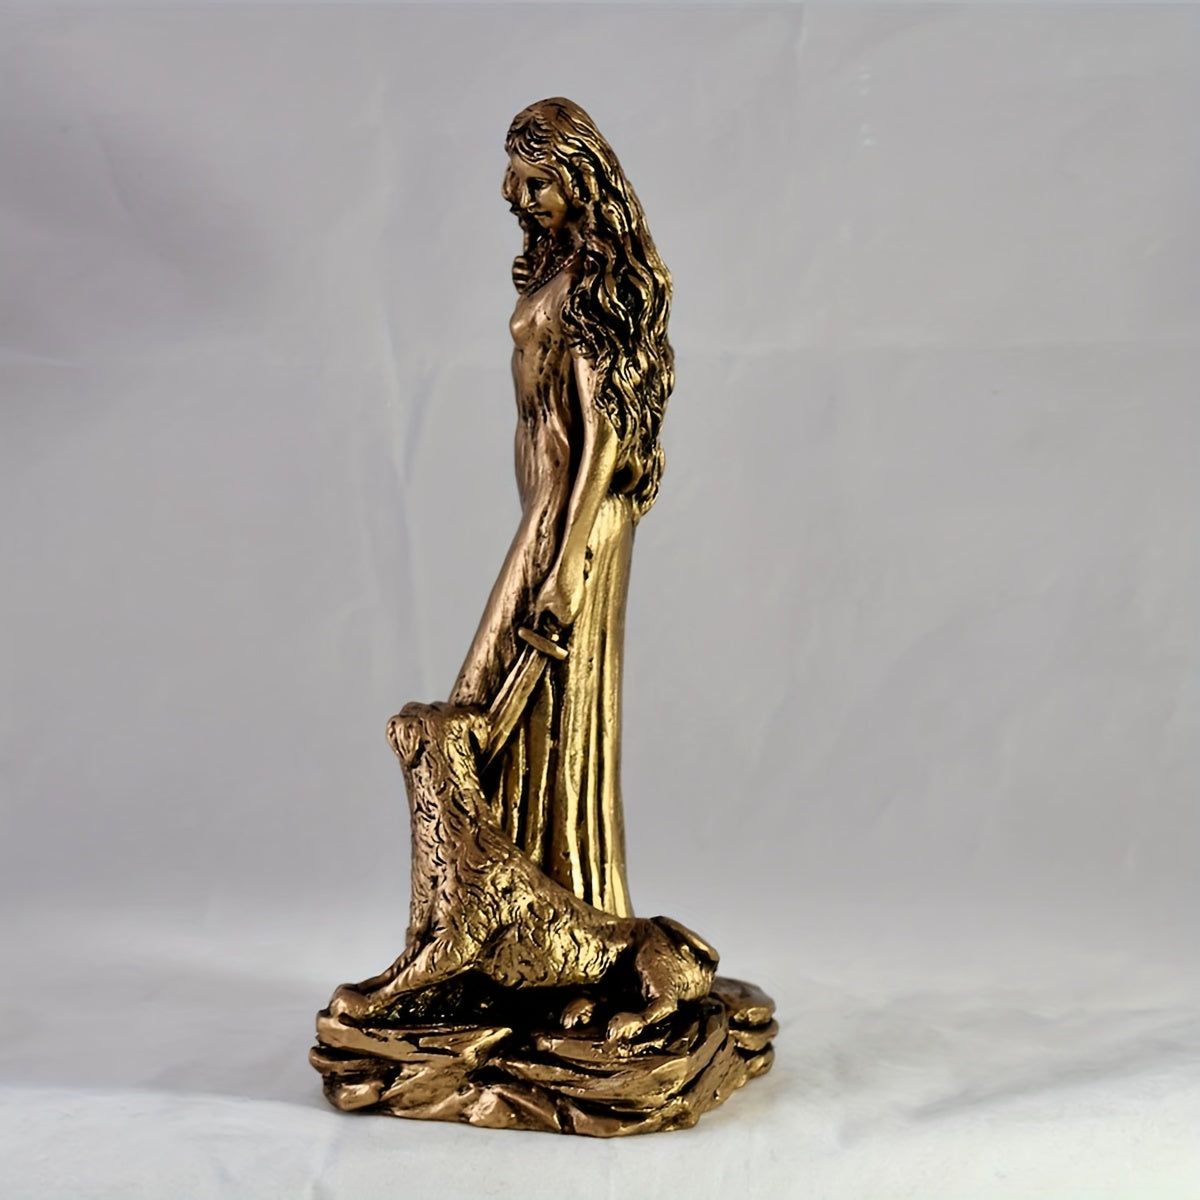 Hecate Goddess Statue